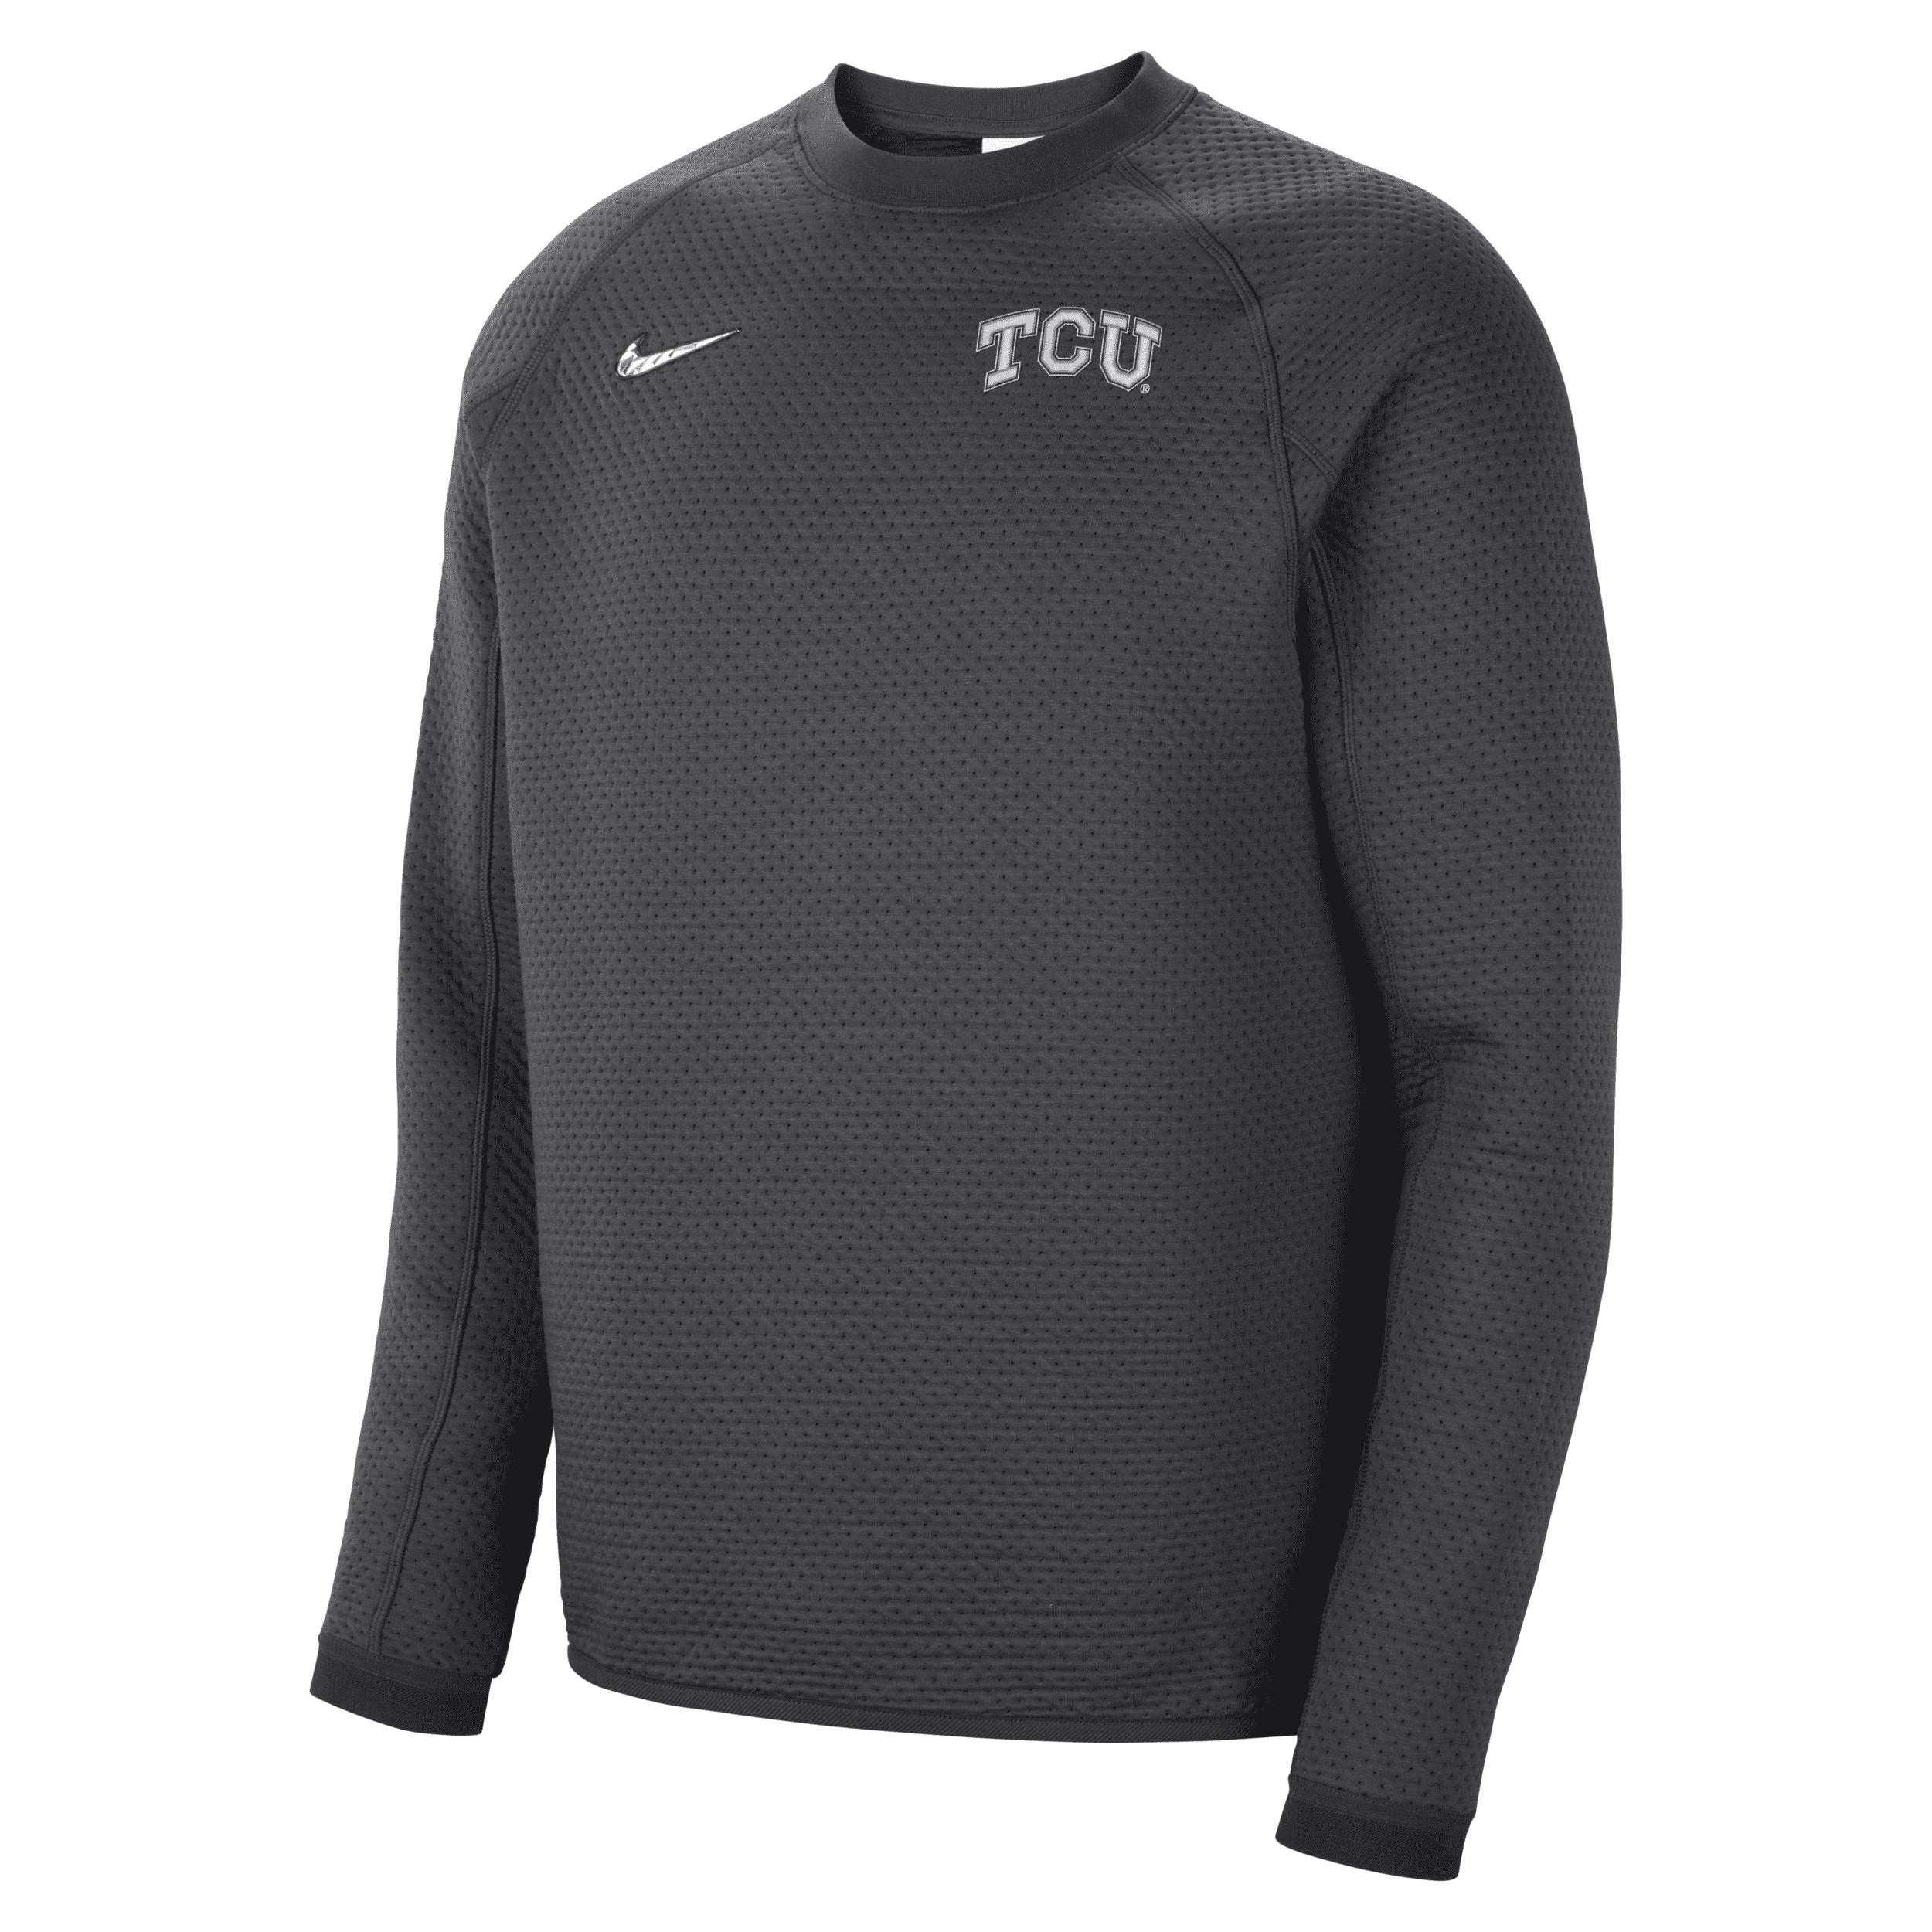 Nike Tcu Tech Pack Therma-fit Adv College Sweatshirt In Grey, in Gray ...